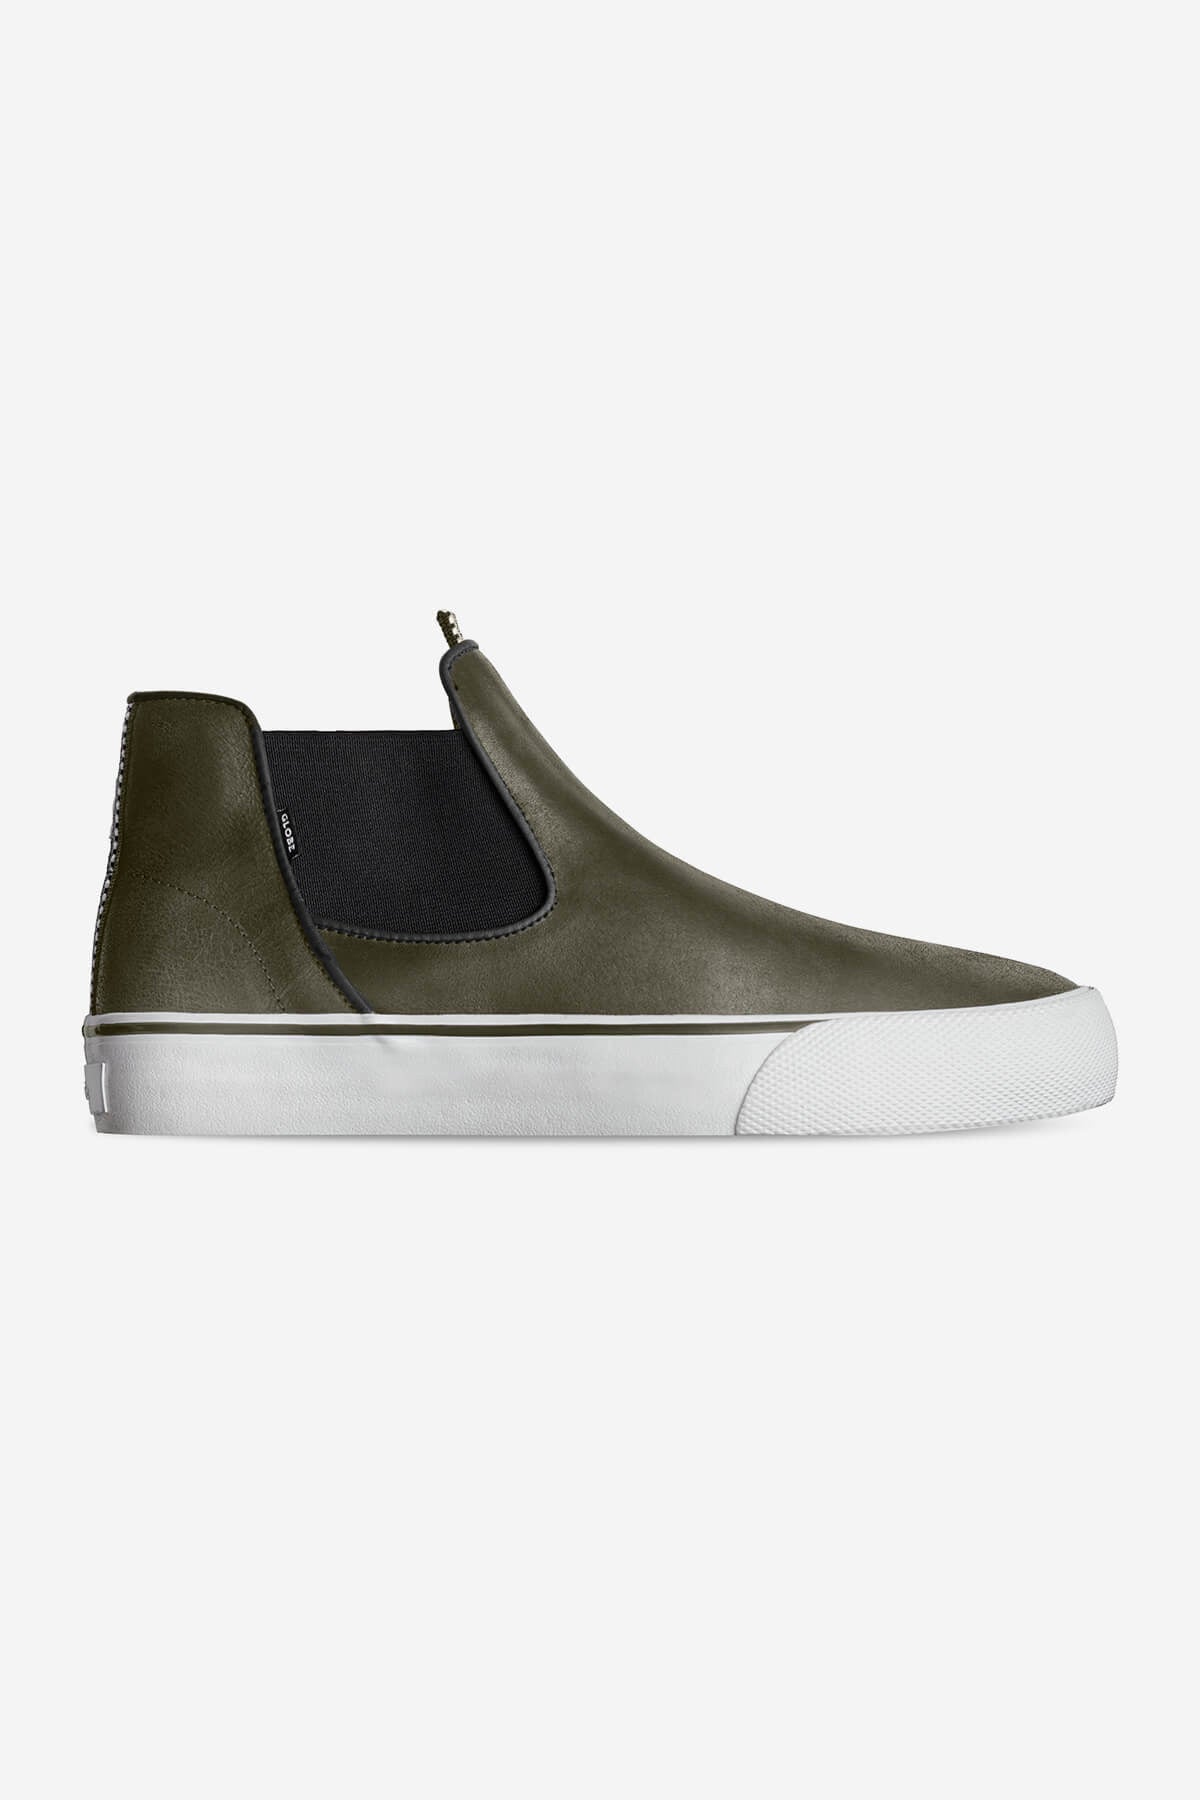 Globe - Dover - Olive/Gillette - skateboard Chaussures